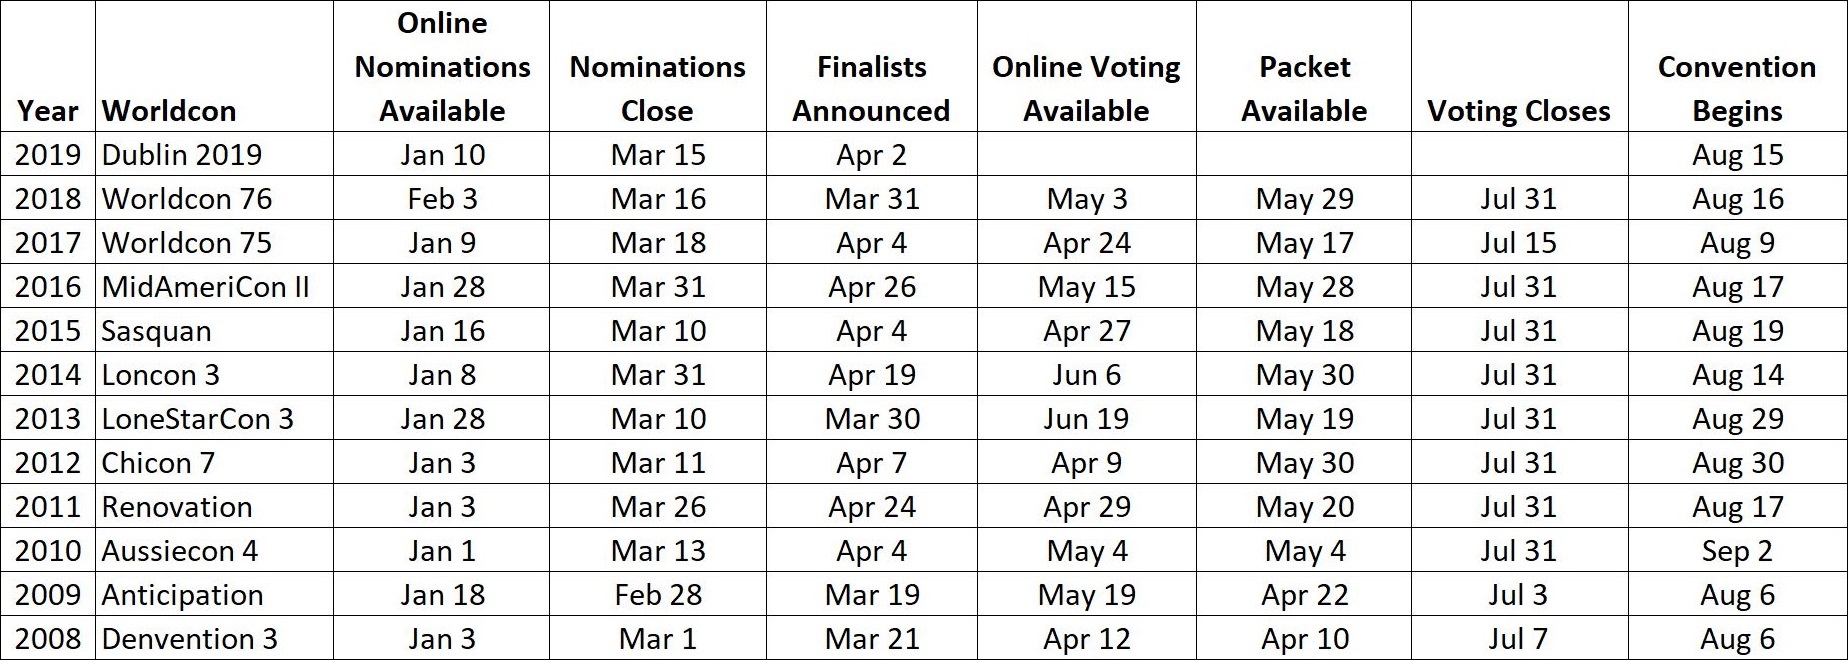 Hugo Nomination and Voting Dates